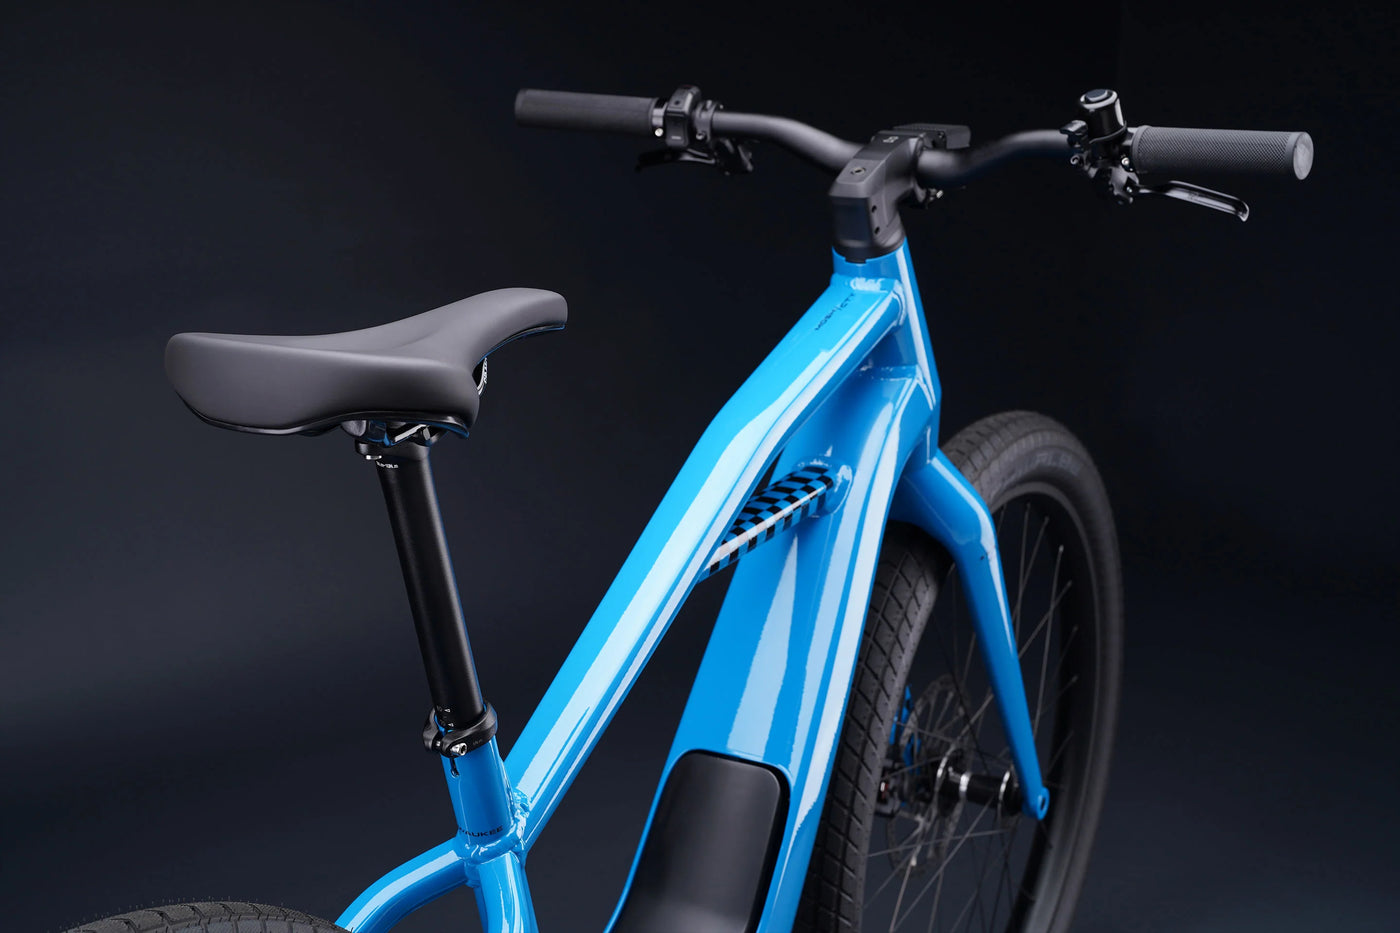 Serial 1 - MOSH/CTY | Electric Bike